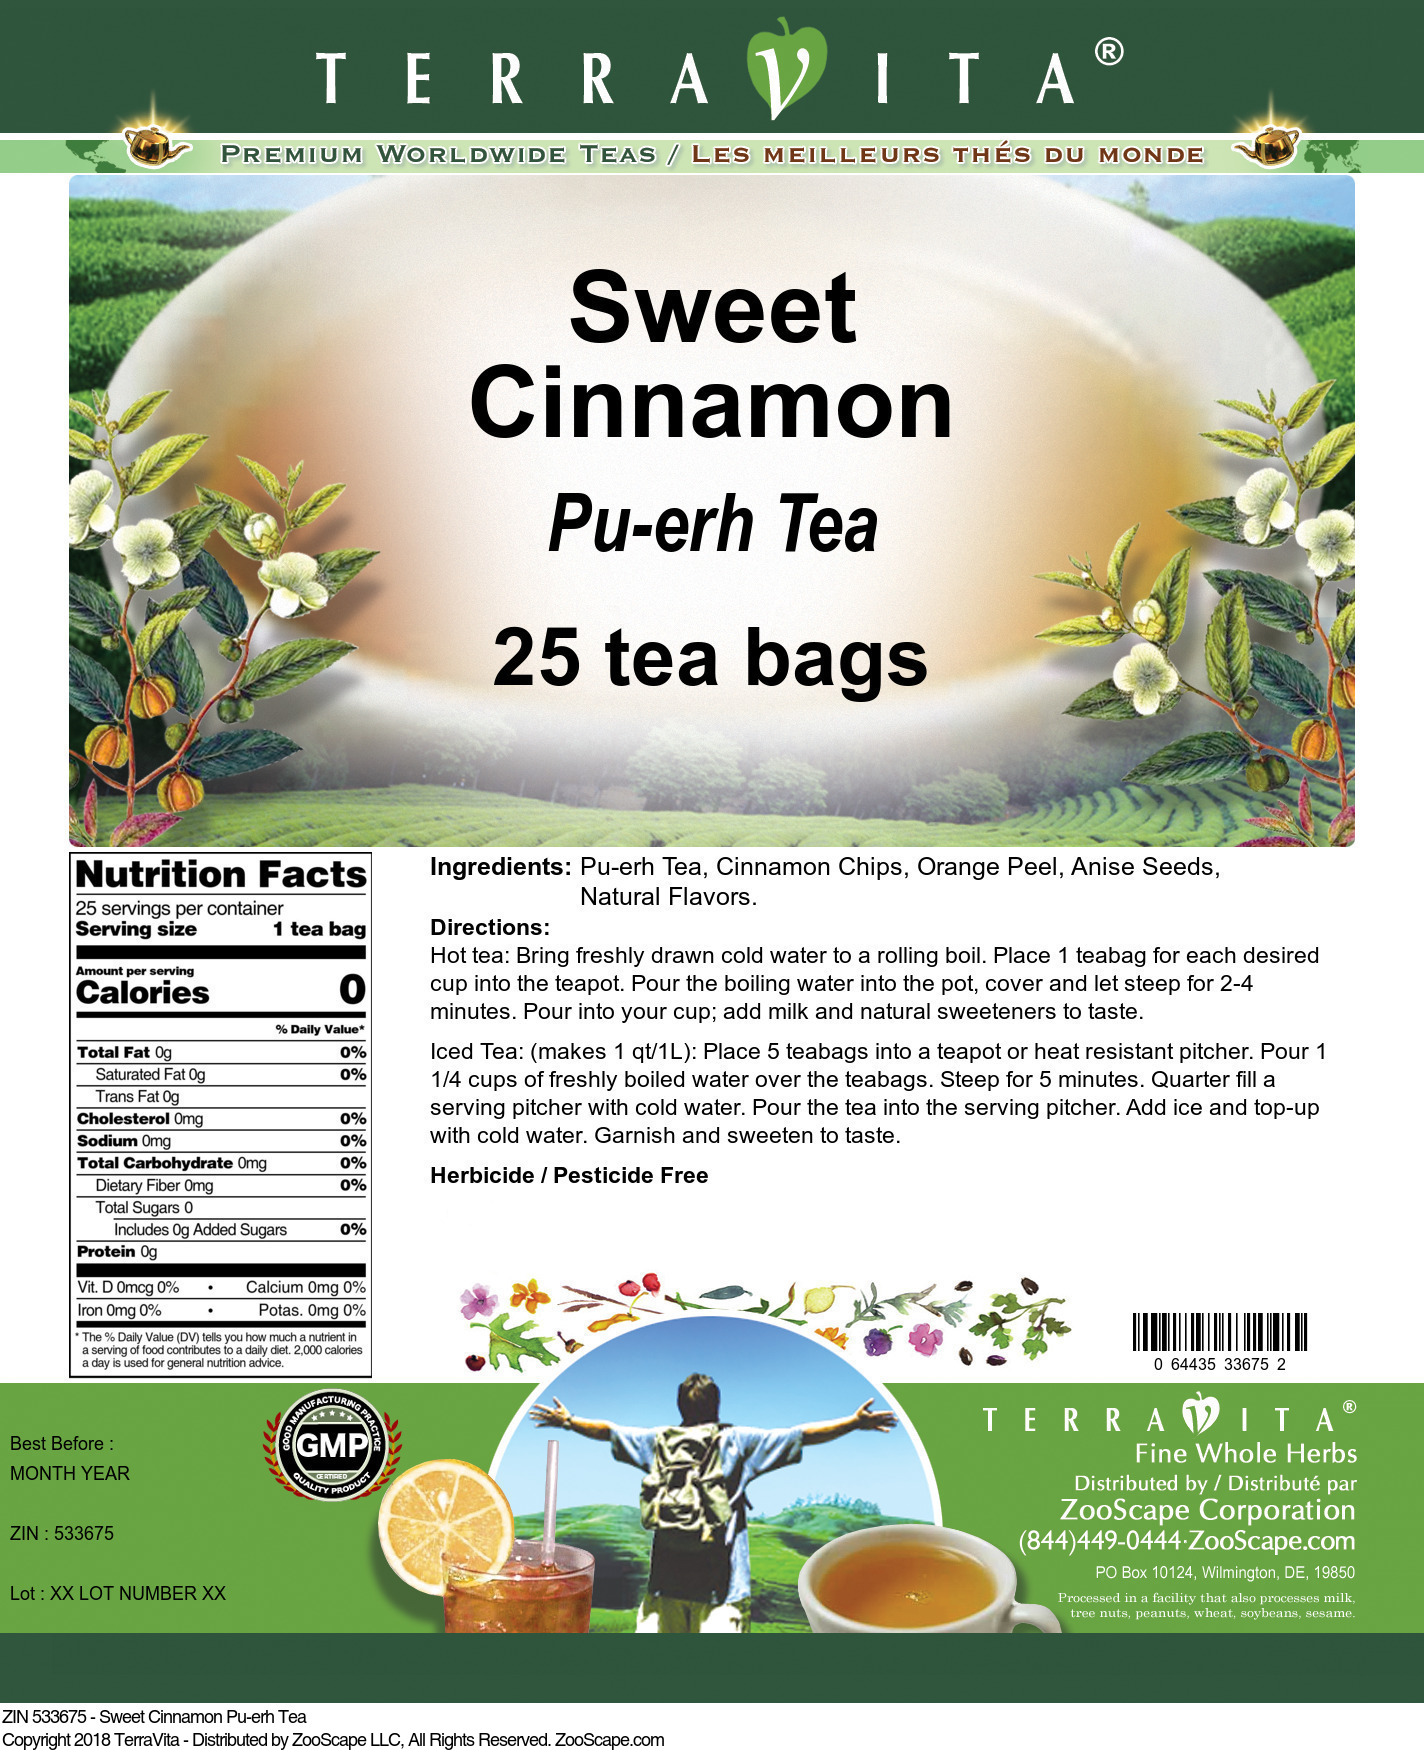 Sweet Cinnamon Pu-erh Tea - Label